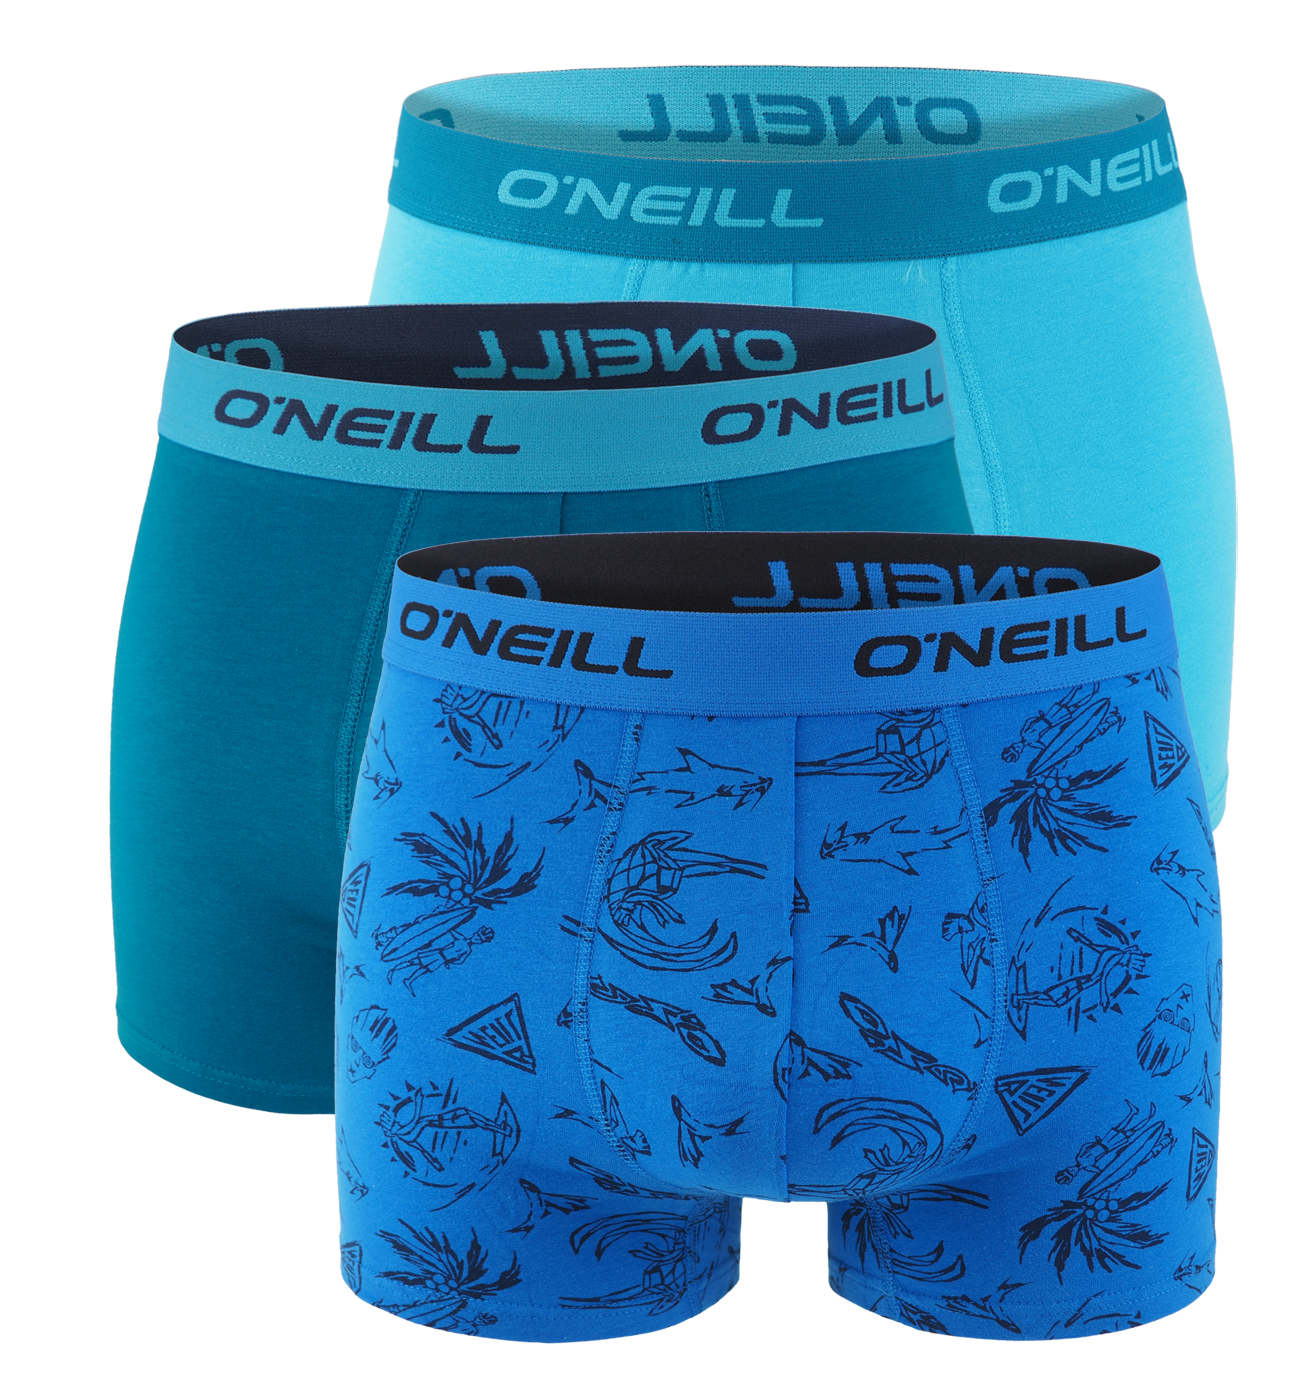 O'NEILL - boxerky 3PACK ocean & beach blue color combo - limitovana edicia-XXL (103-108 cm)